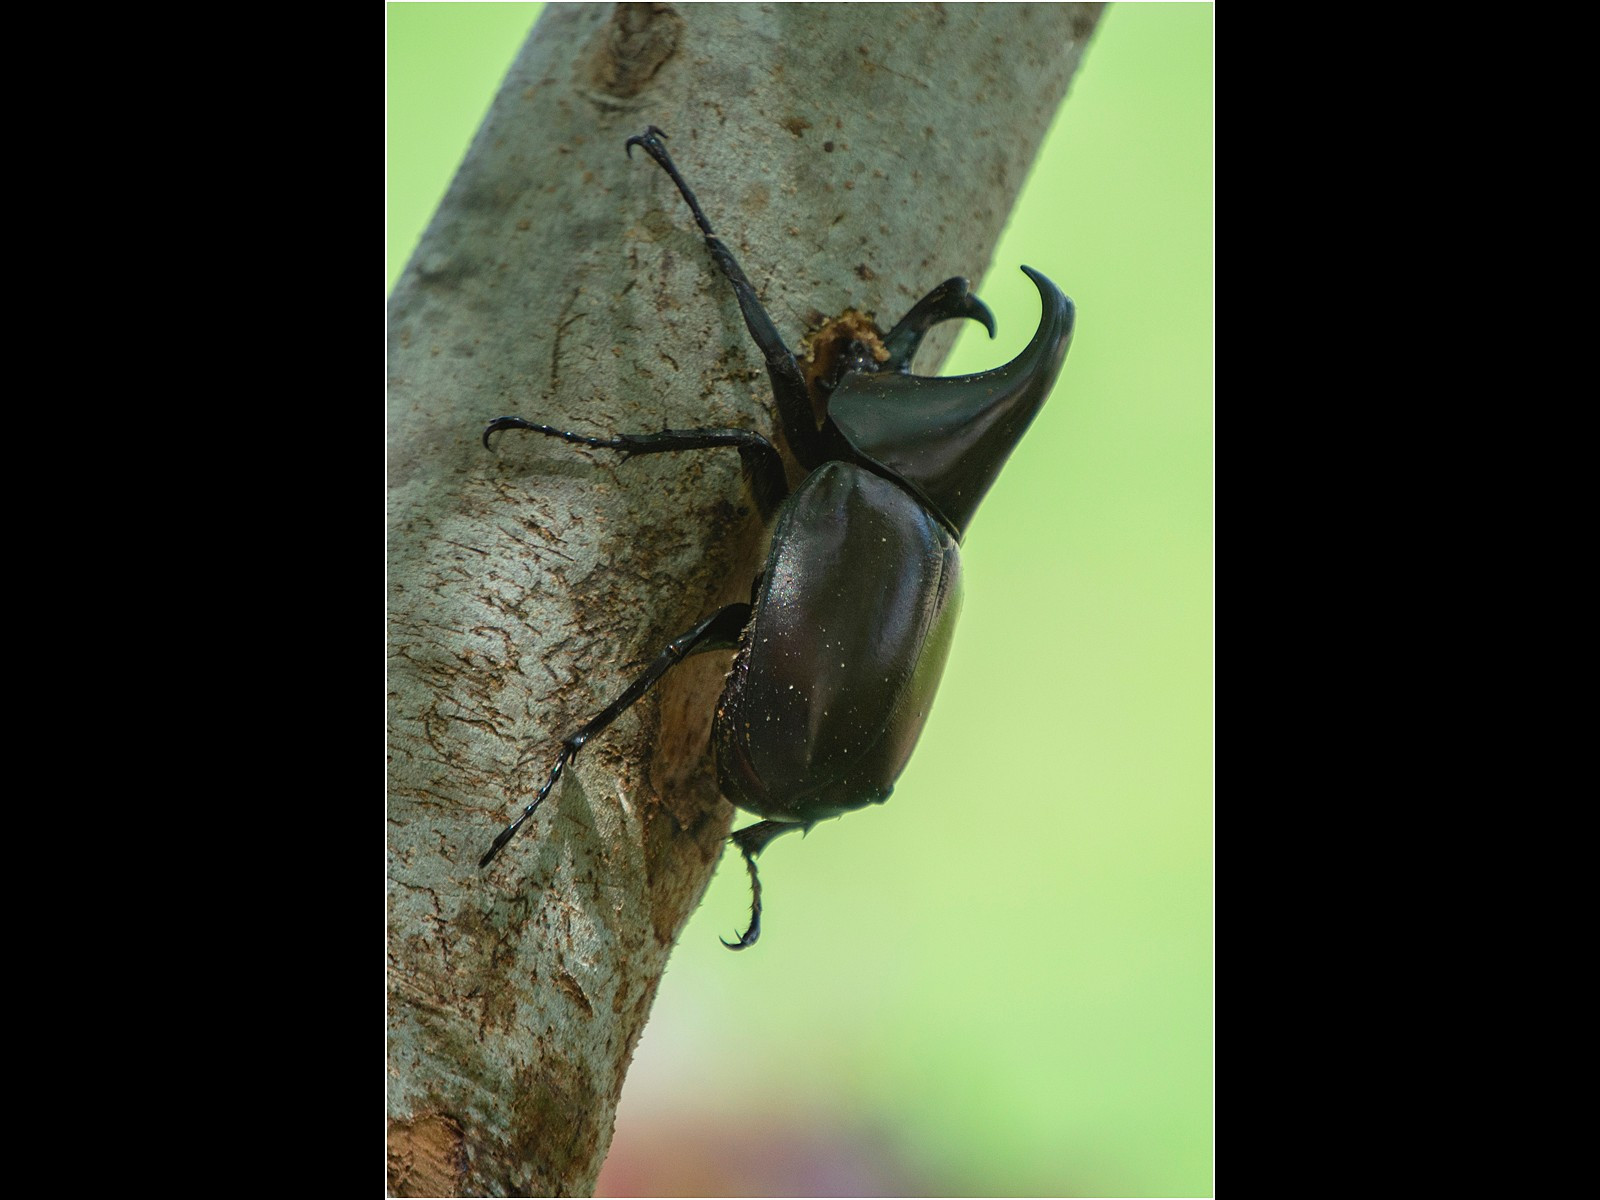 A Rhino beetle in a Queensland garden